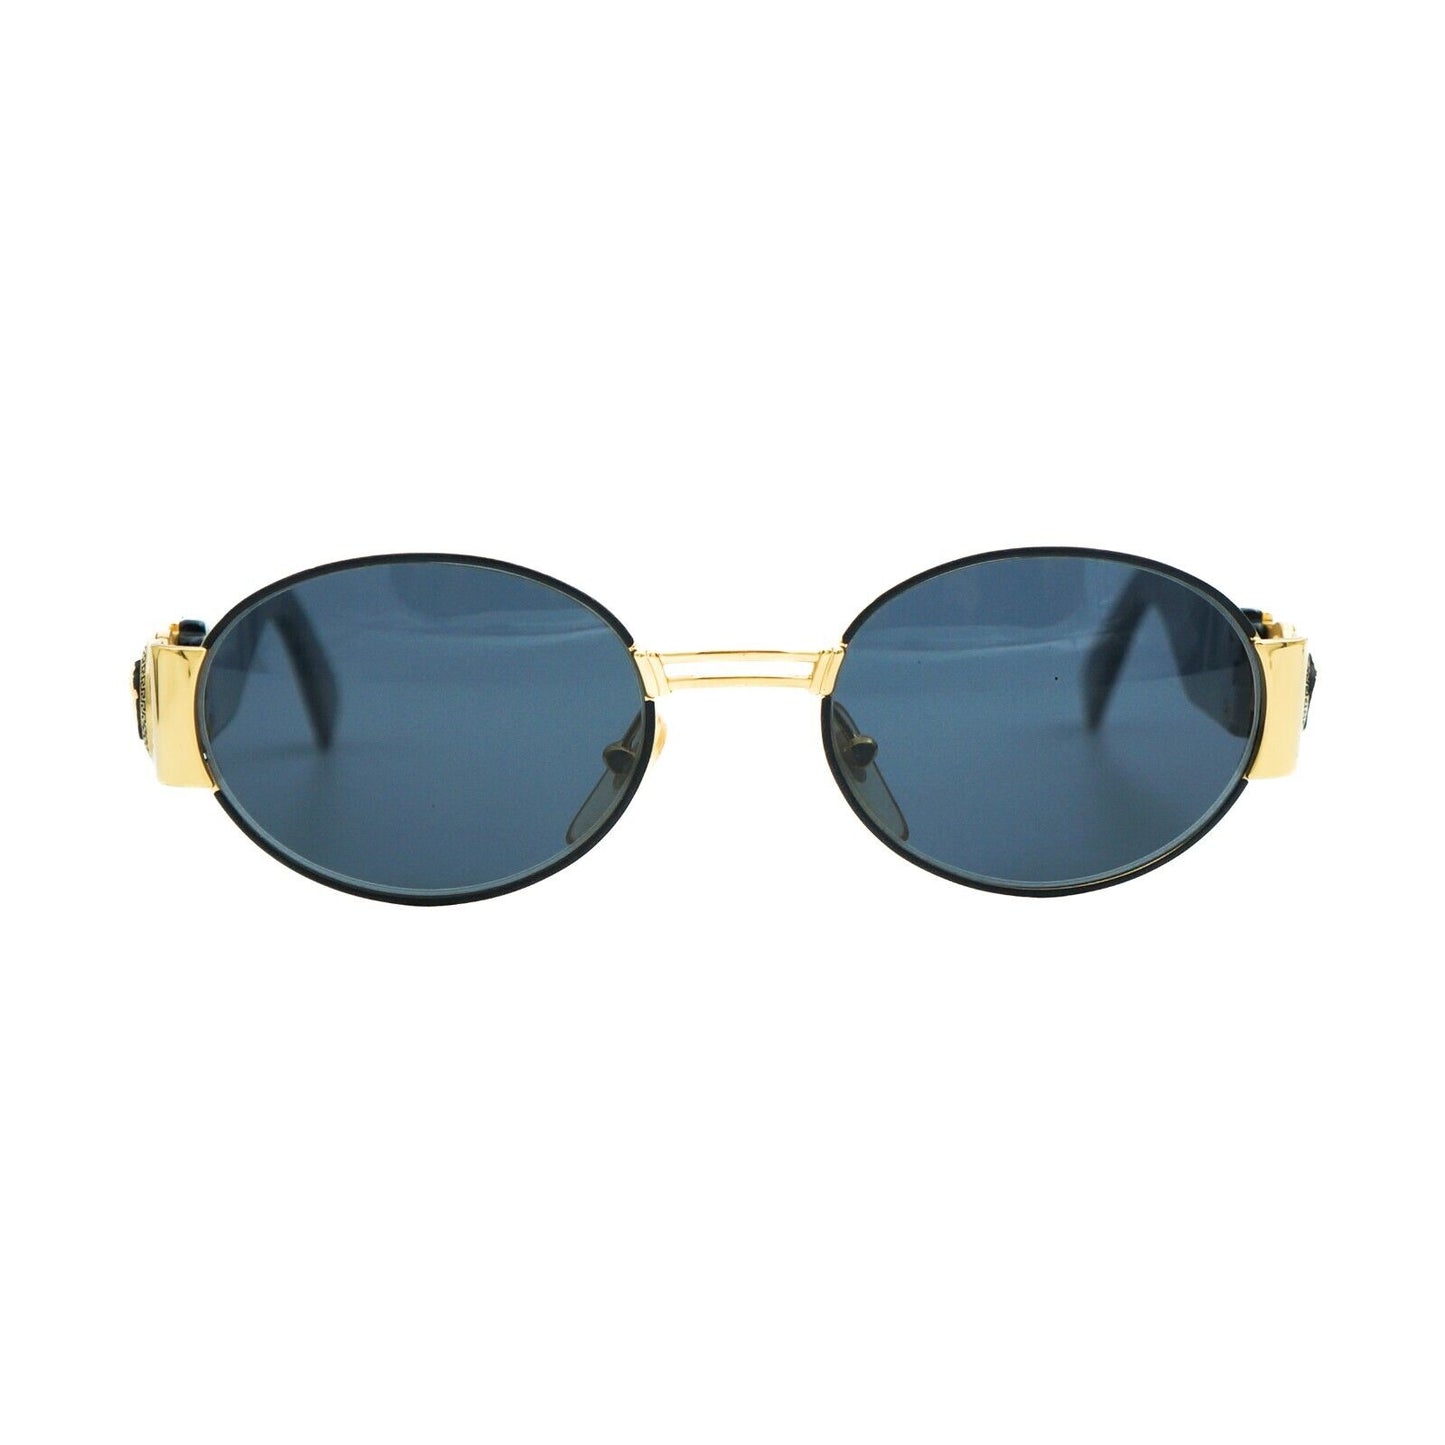 GIANNI VERSACE S71 Medusa Gold Oval Sunglasses Vintage 90s